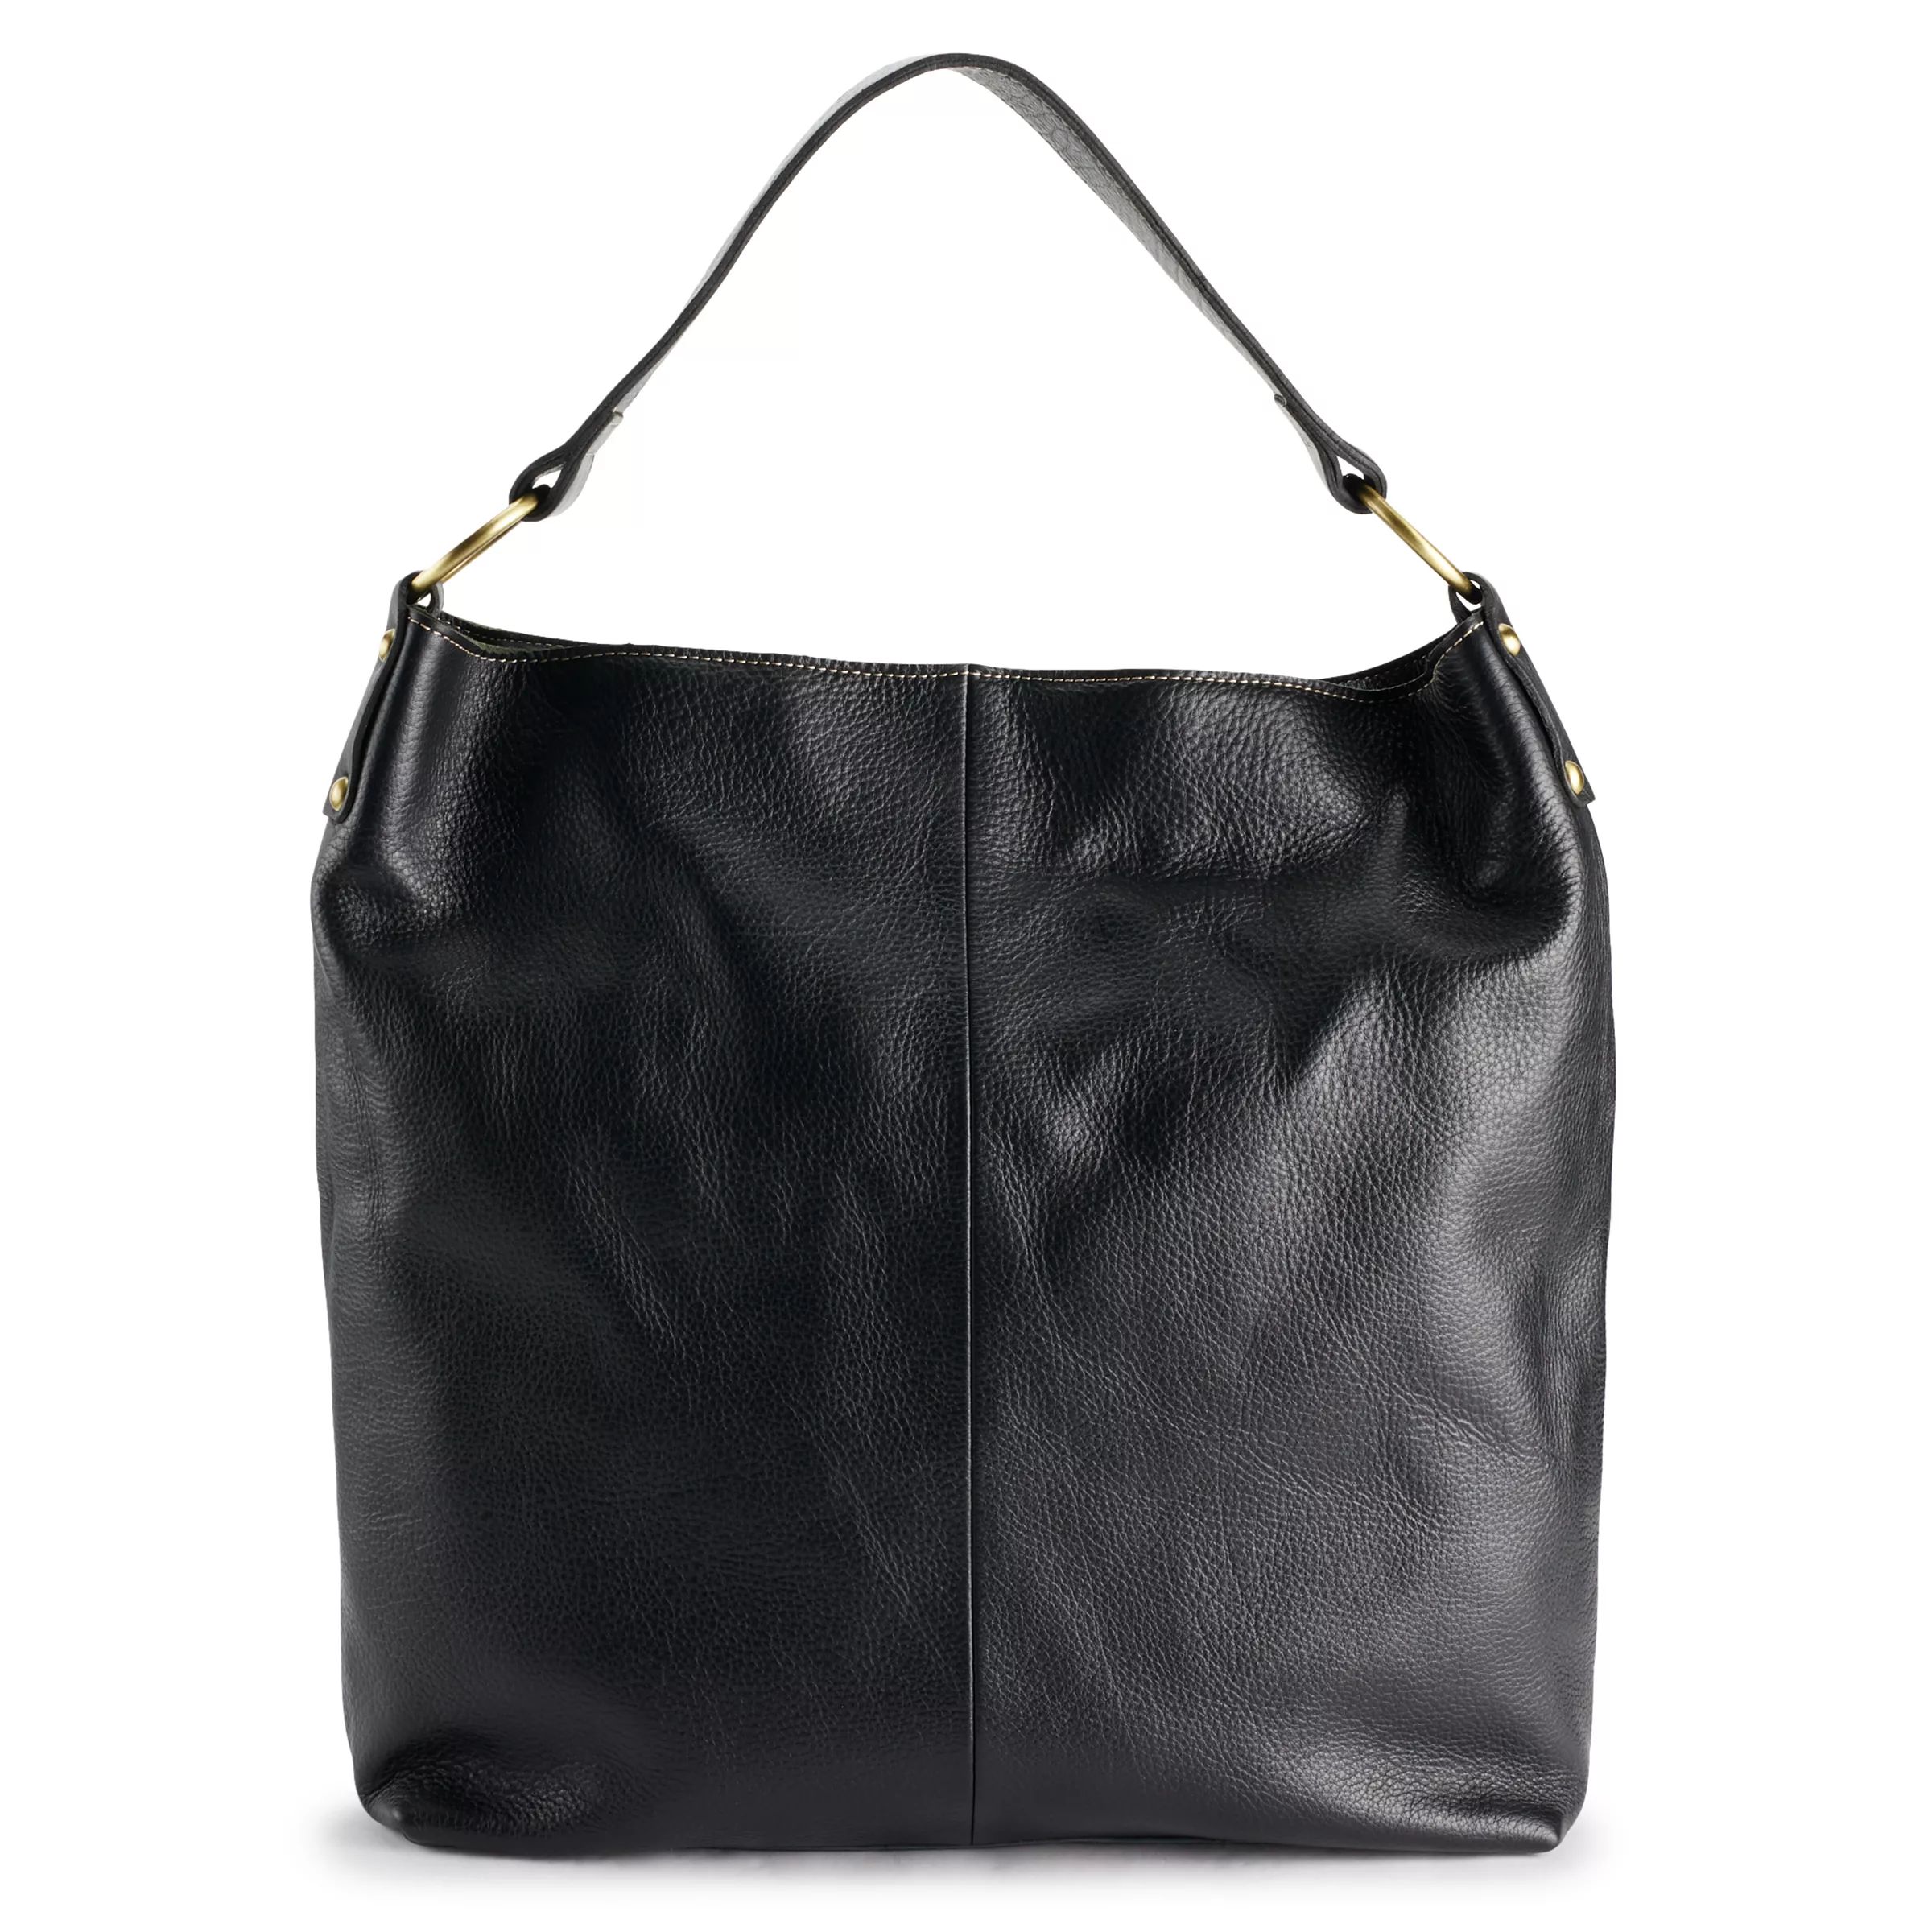 AmeriLeather Cynthia Leather Handbag | Kohl's